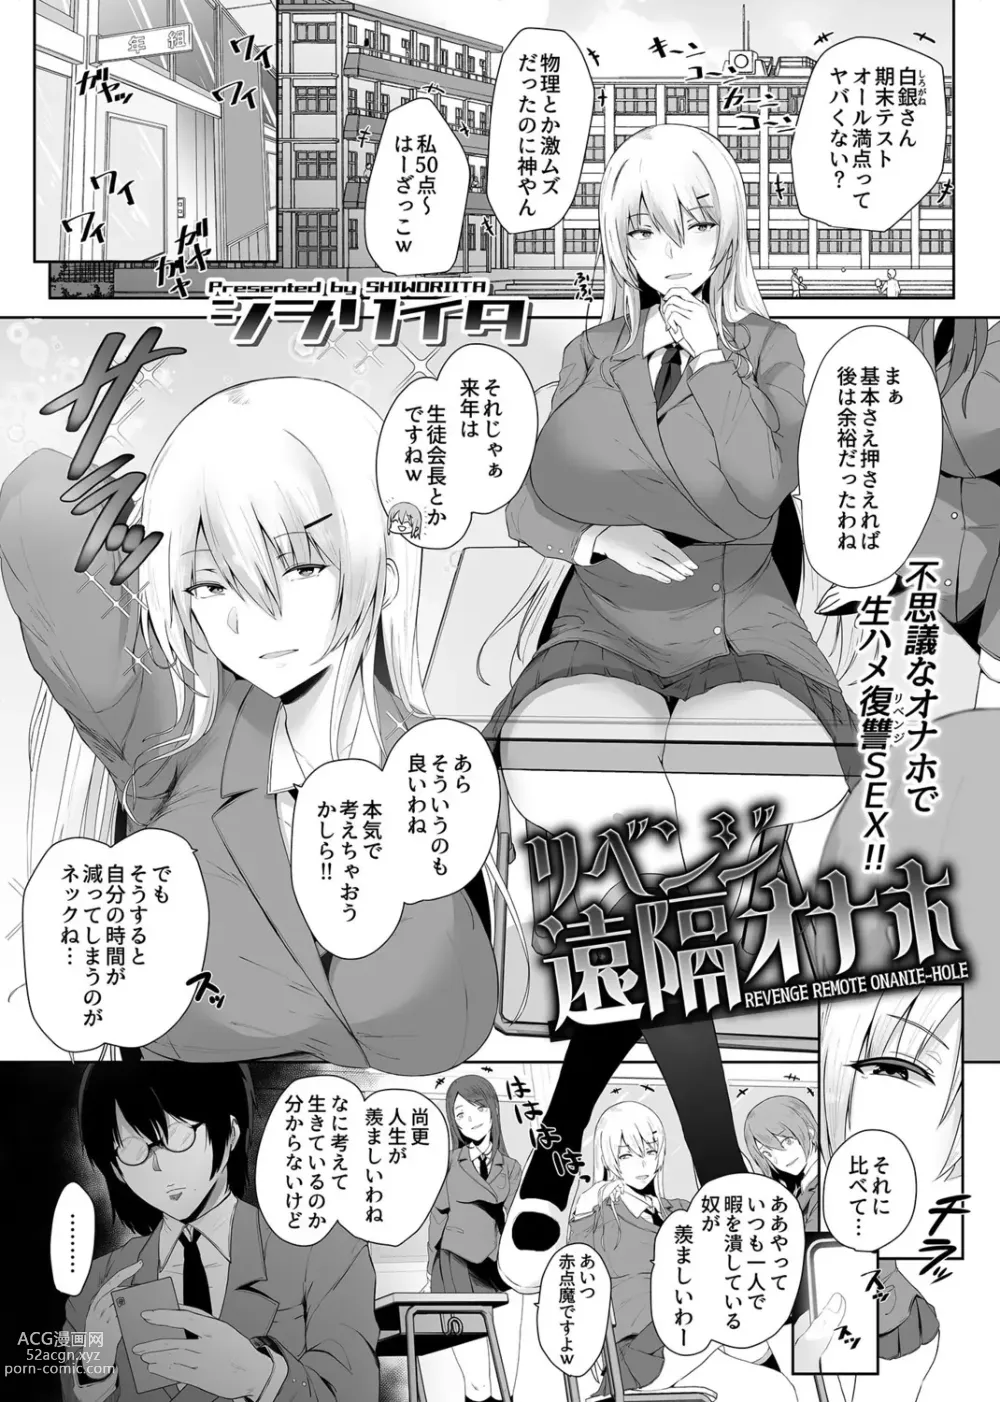 Page 3 of manga Revenge Enkaku Onaho